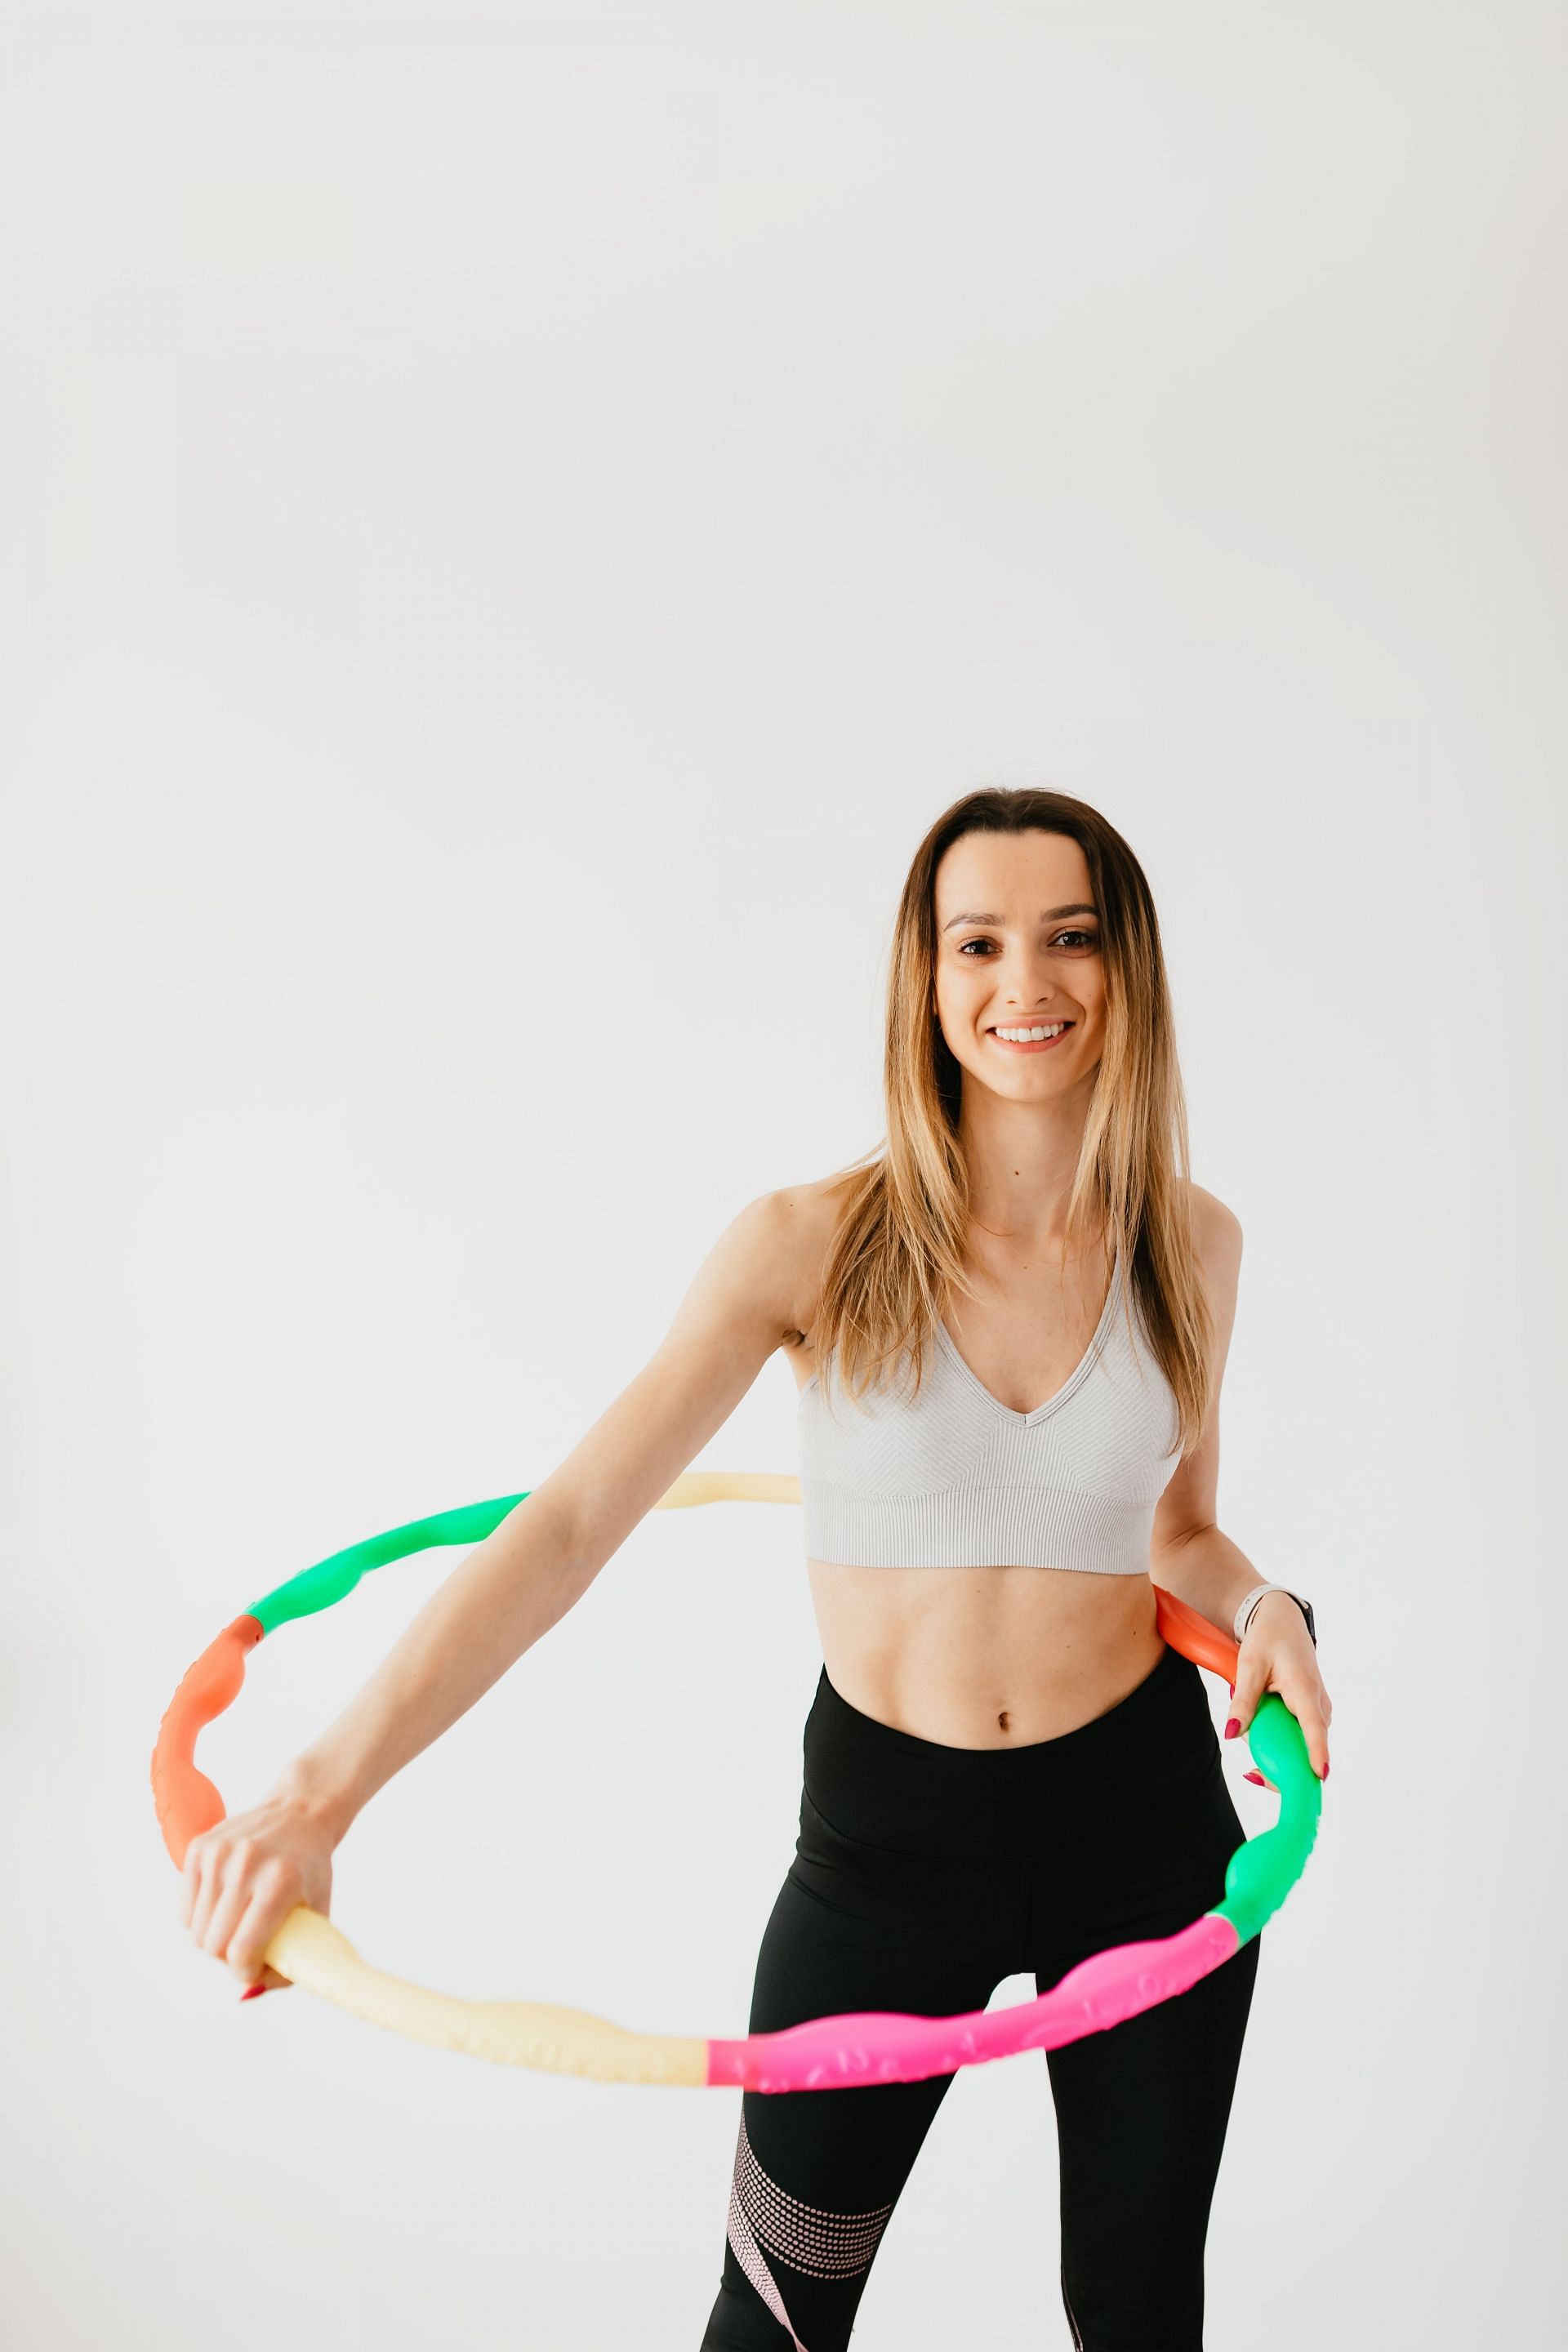 Hula hoop exercises burn a lot of calories. (Image via Pexels/ Karolina Grabowska)